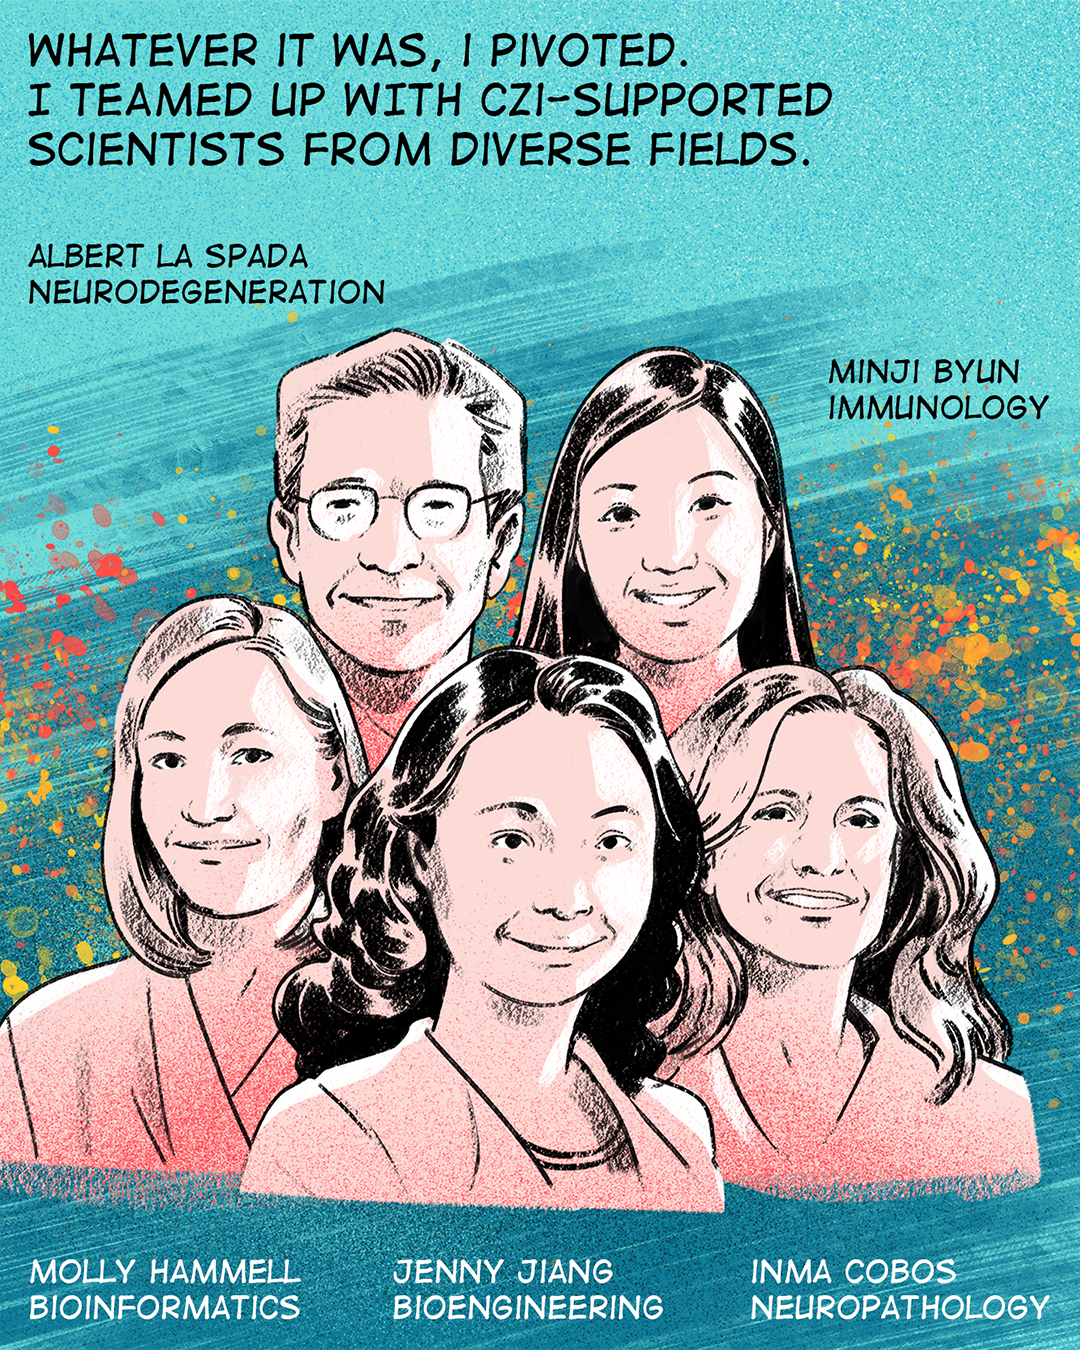 Illustration of scientists Minji Byun, Inma Cobos, Jenny Jiang, Molly Hammell and Albert La Spada